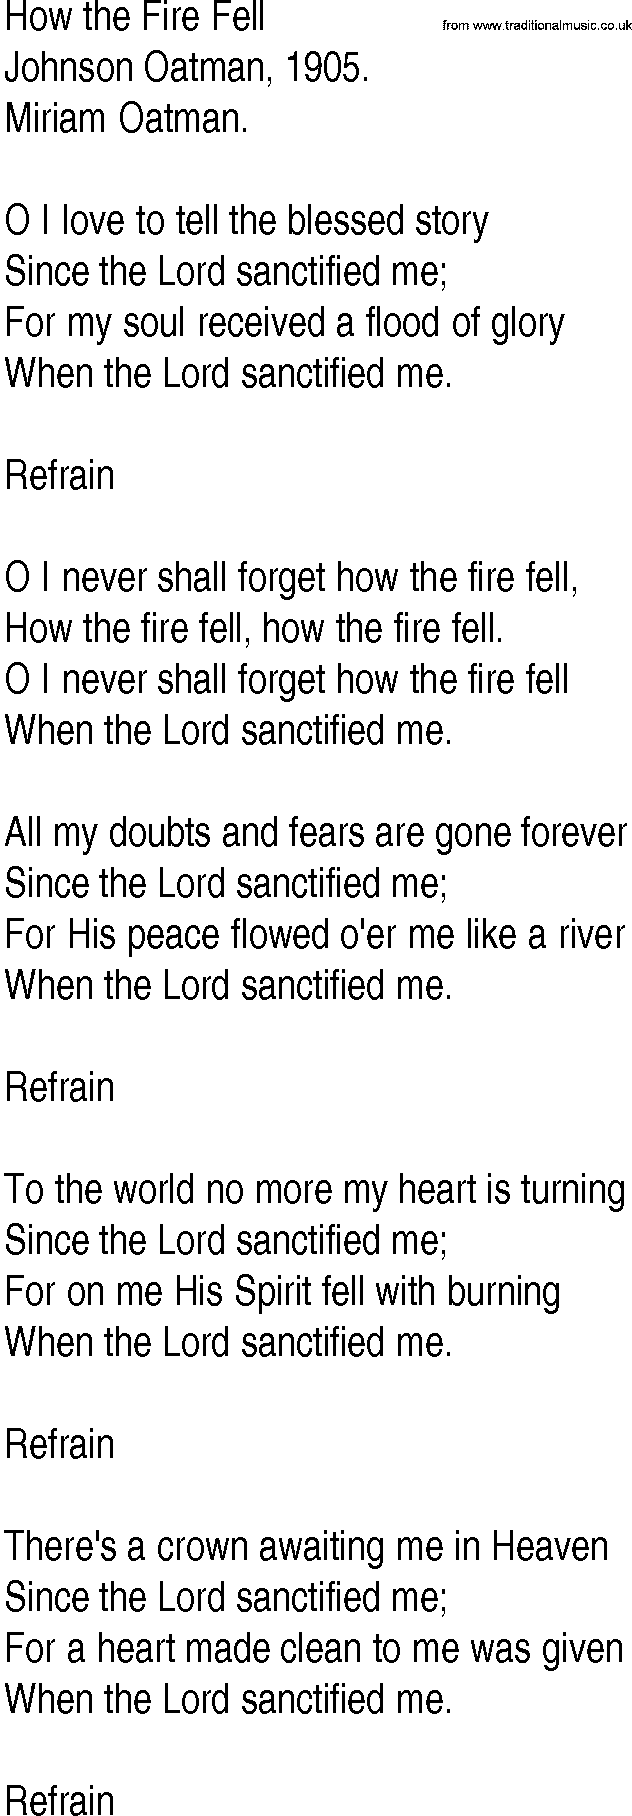 Hymn and Gospel Song: How the Fire Fell by Johnson Oatman lyrics